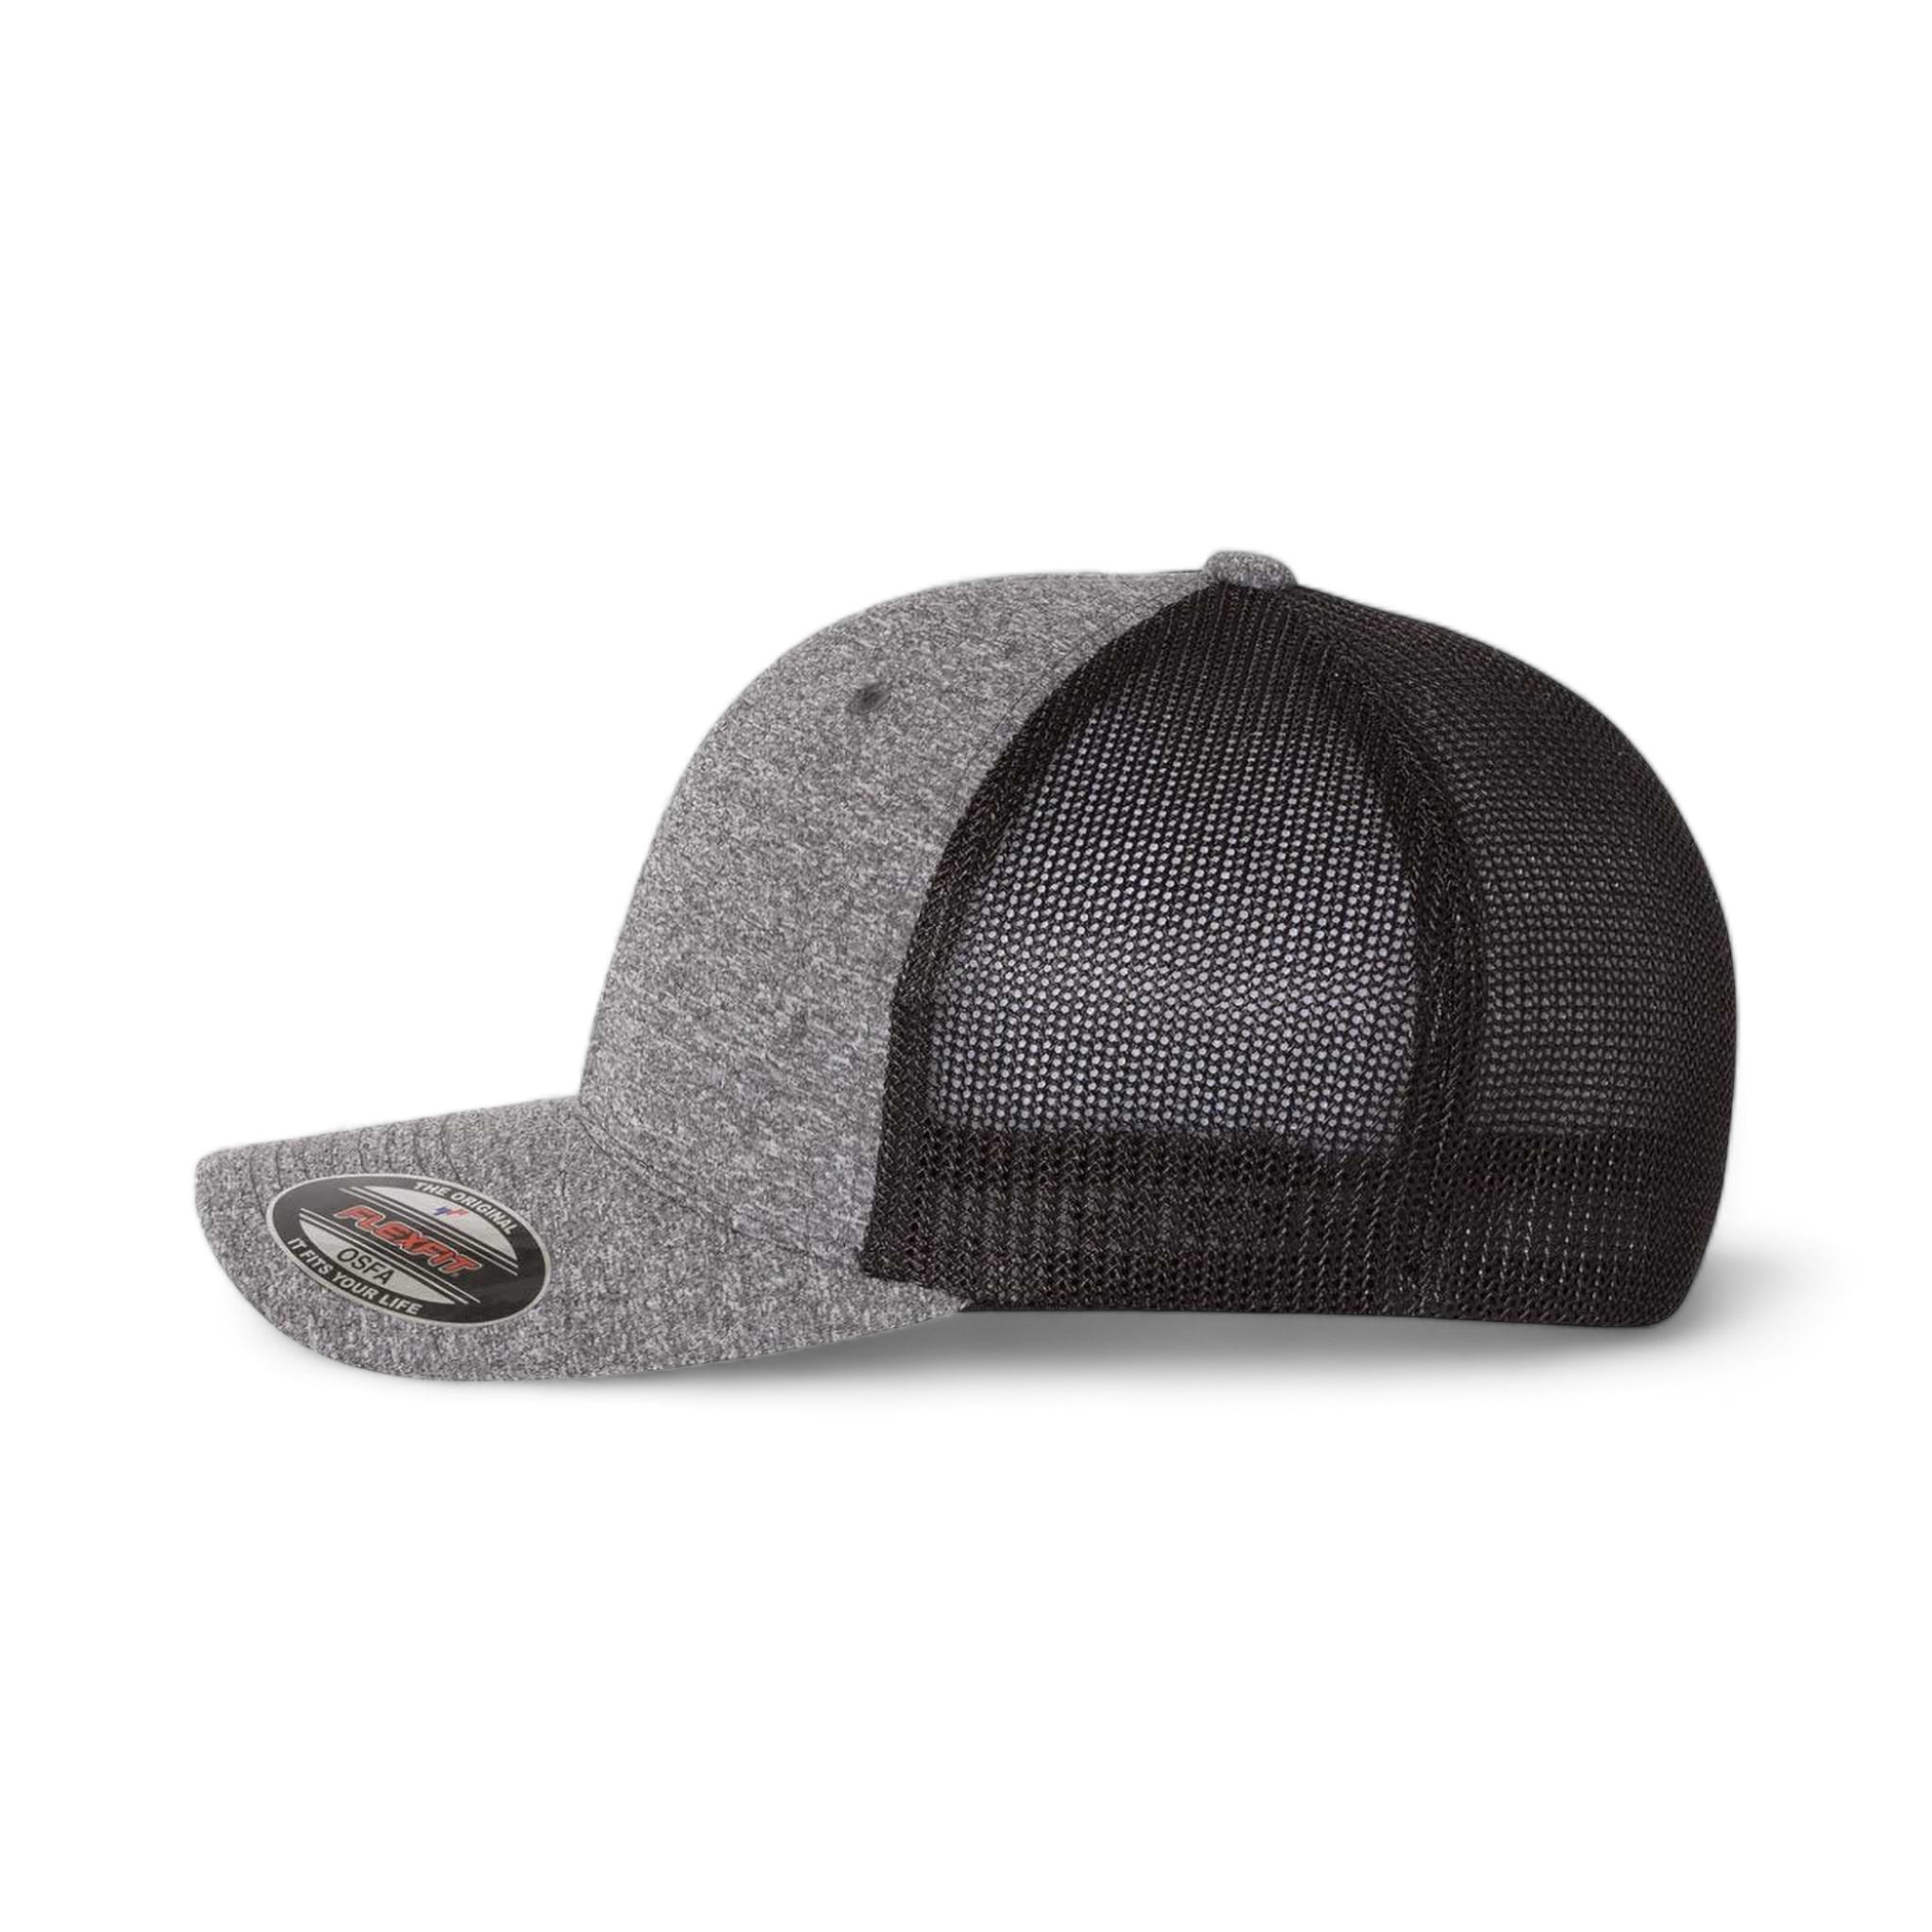 Side view of Flexfit 6311 custom hat in dark heather grey and black